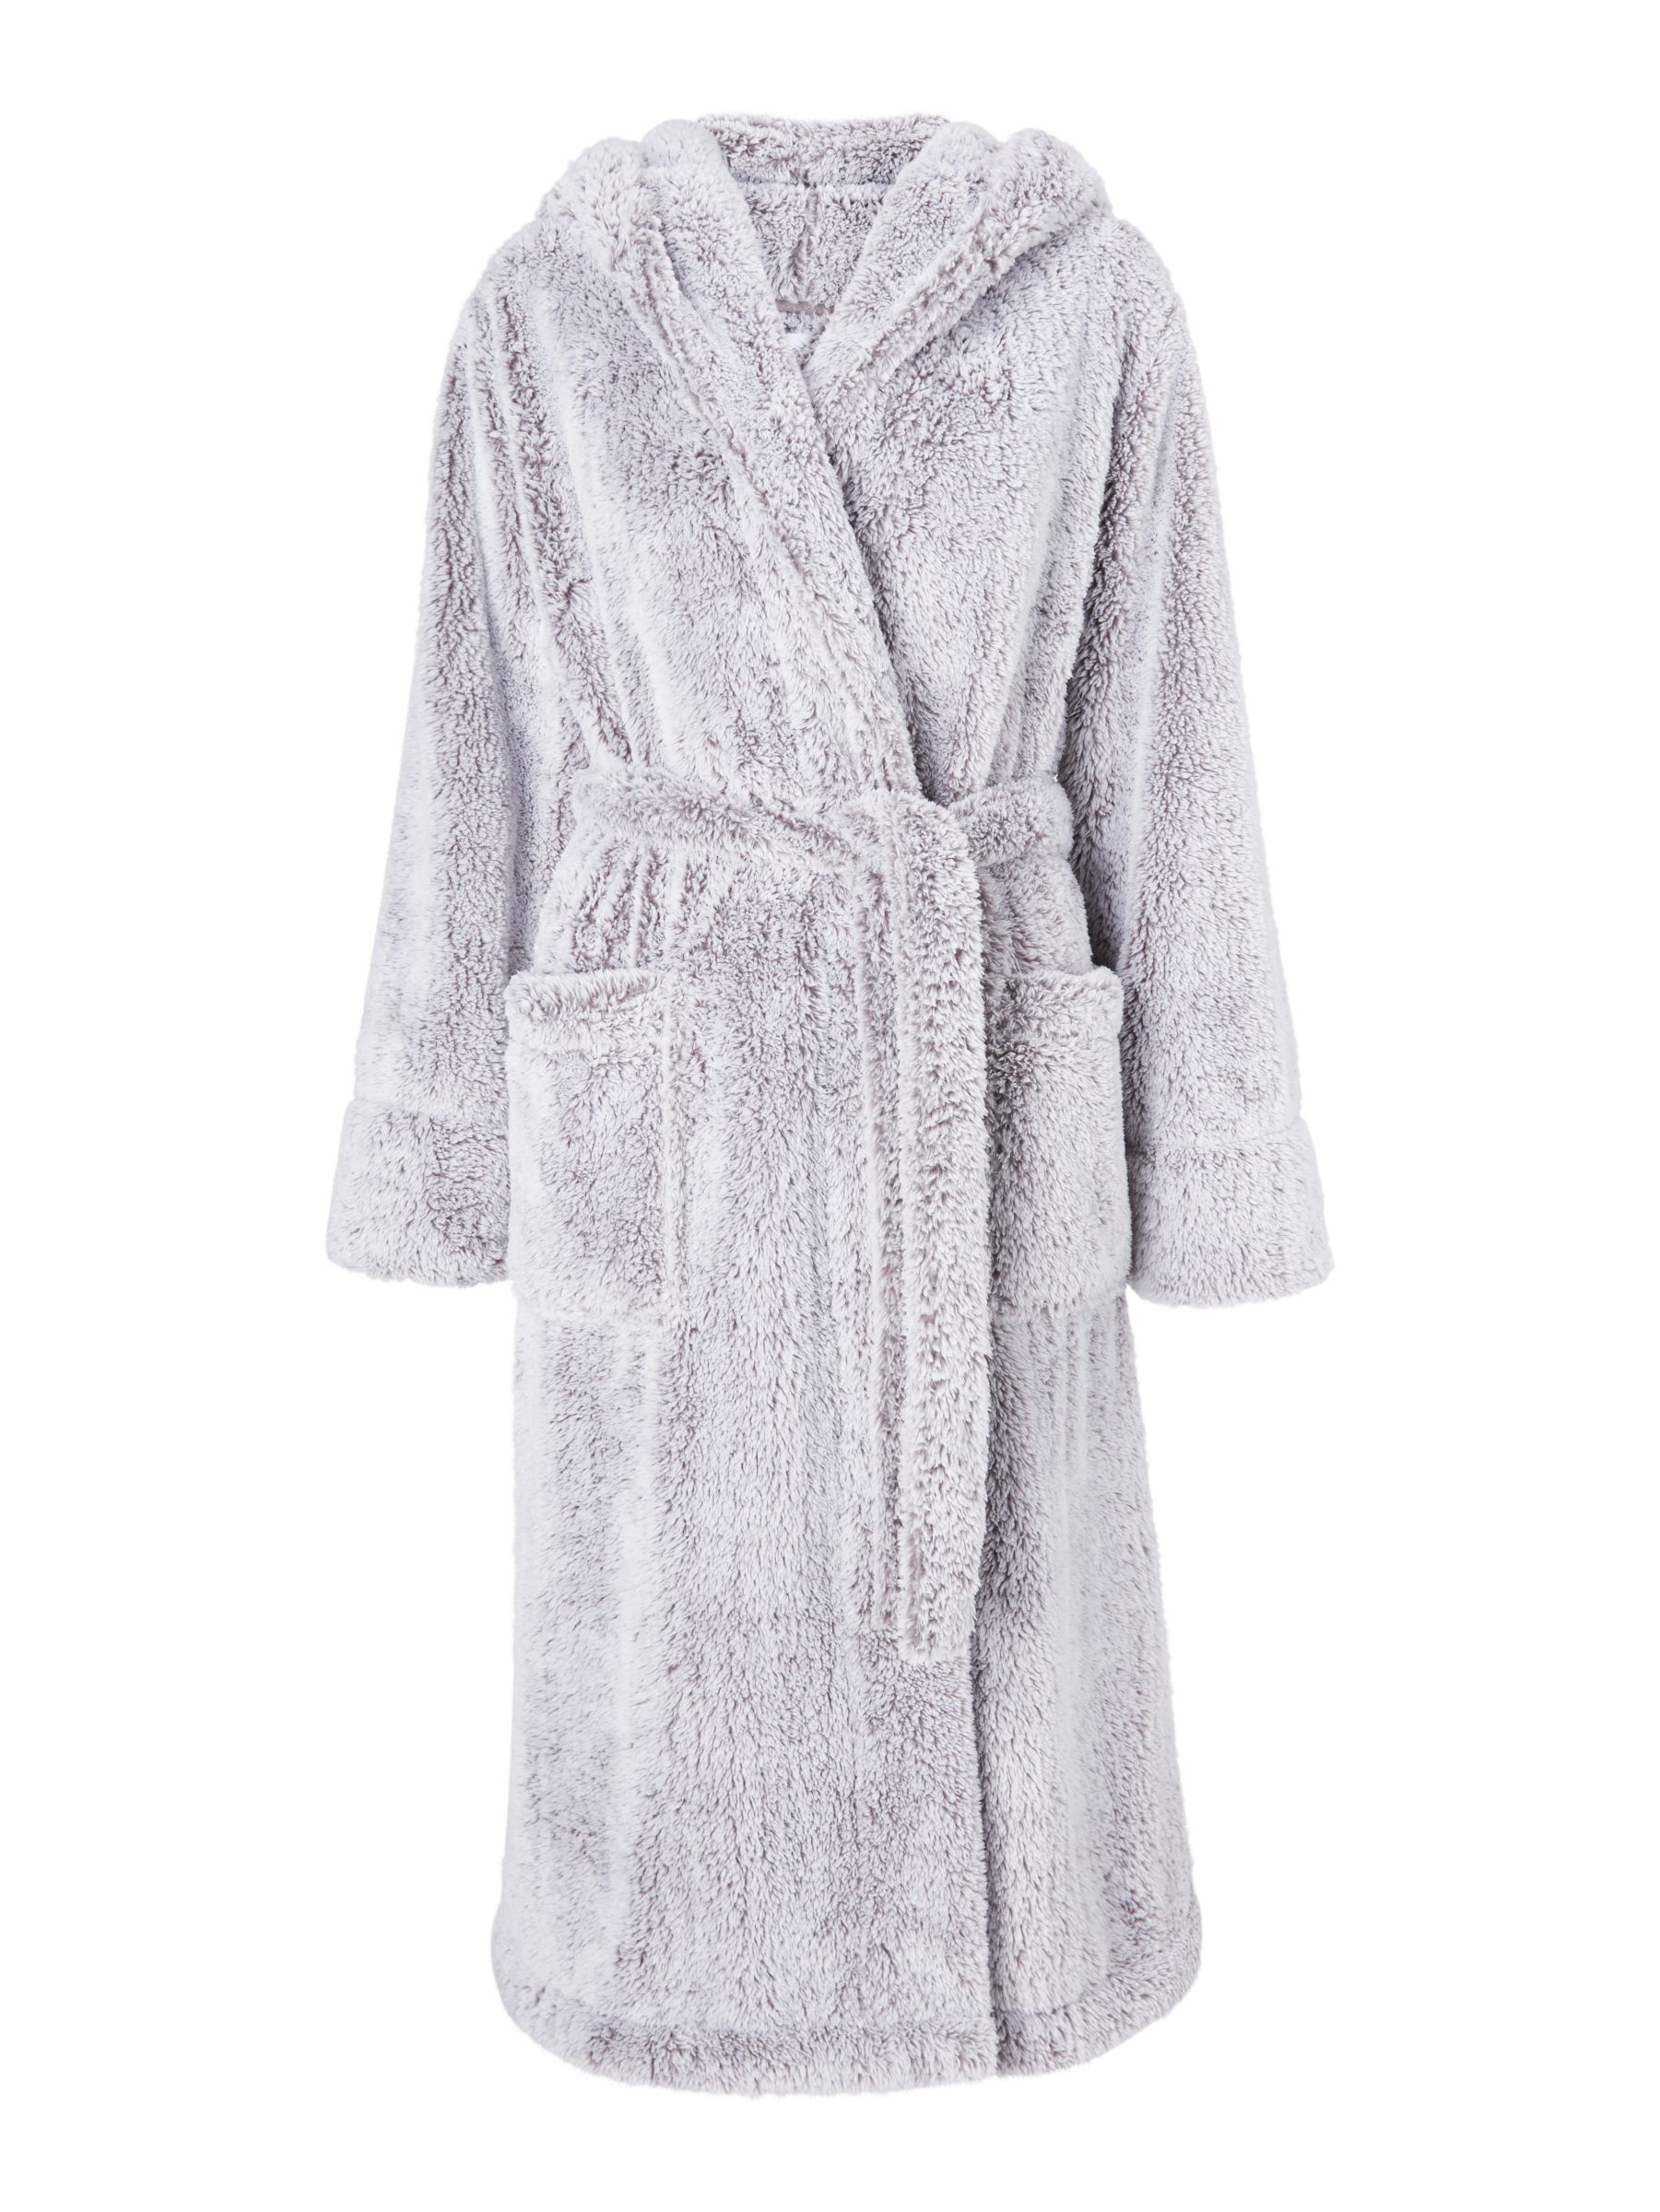 John Lewis Hi Pile Fleece Robe, Grey, S